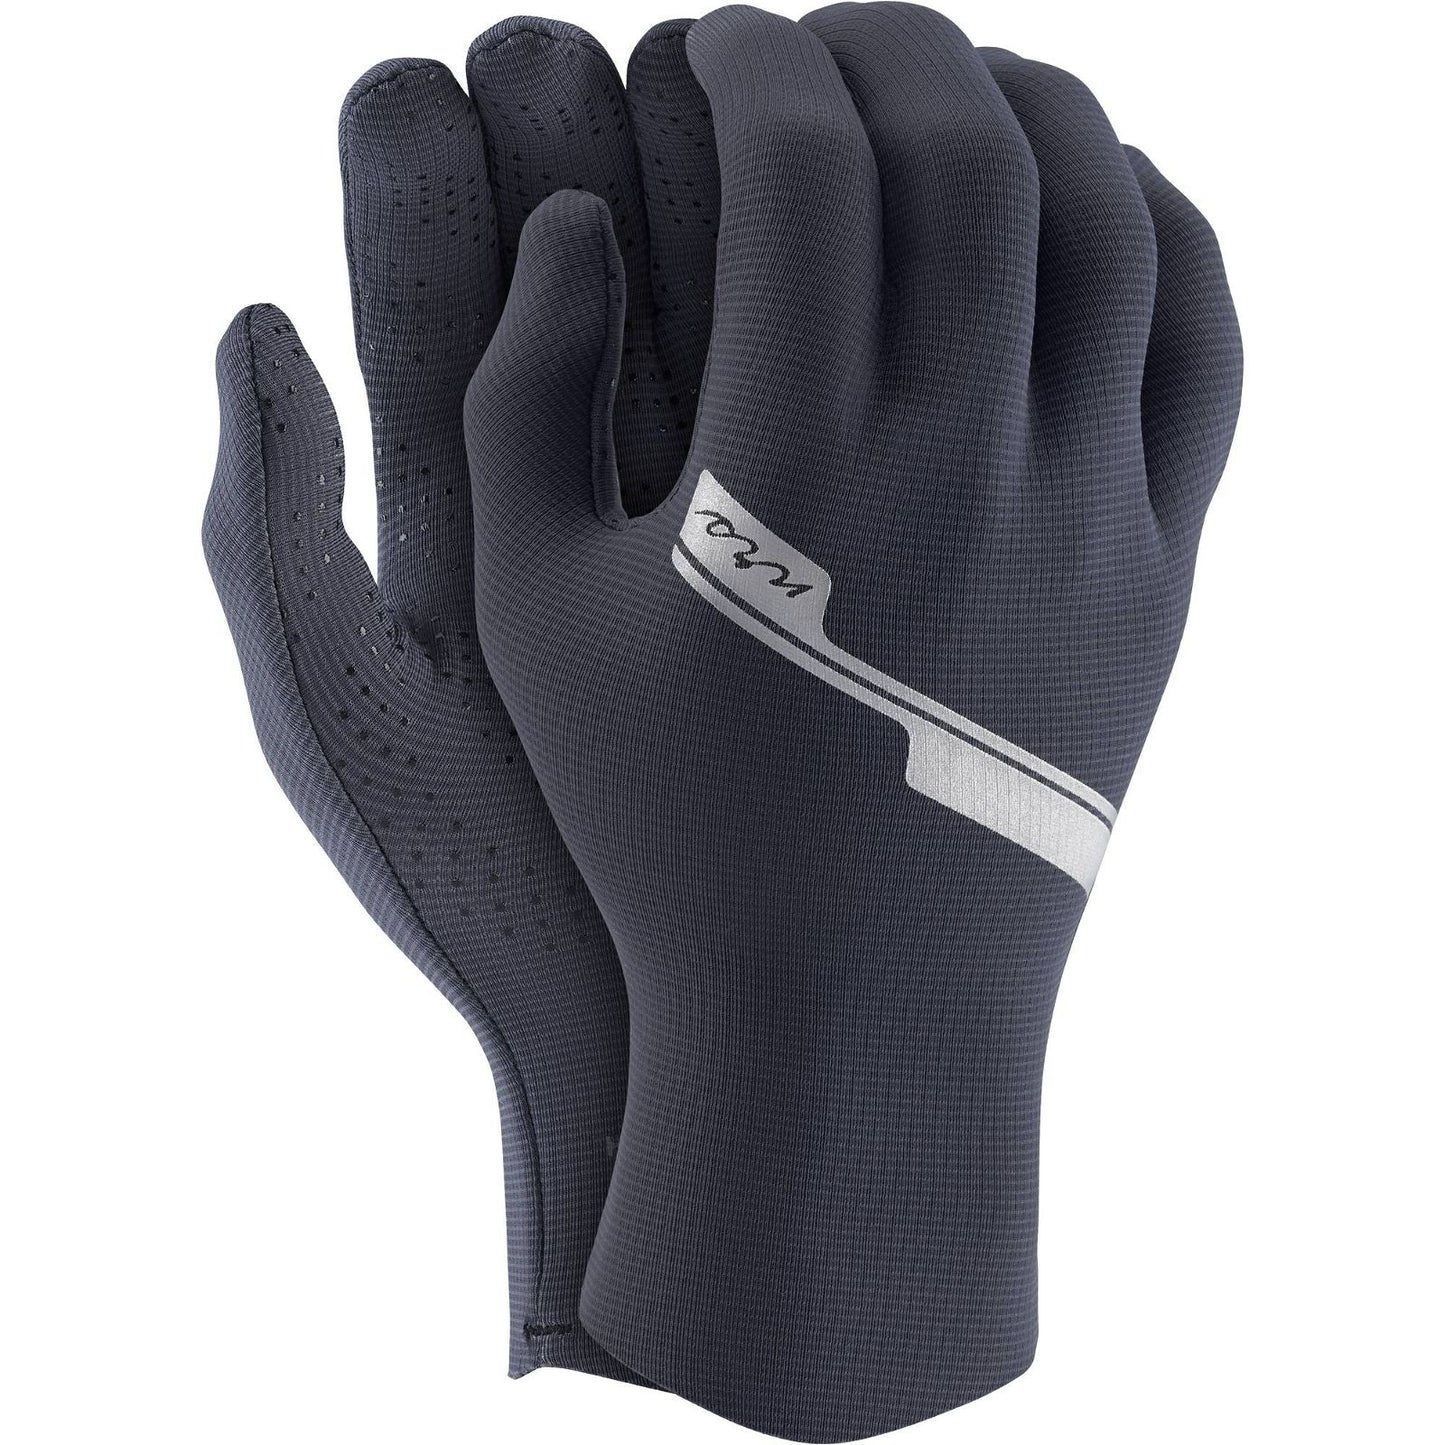 NRS  Women's HydroSkin Gloves  BestCoast Outfitters 